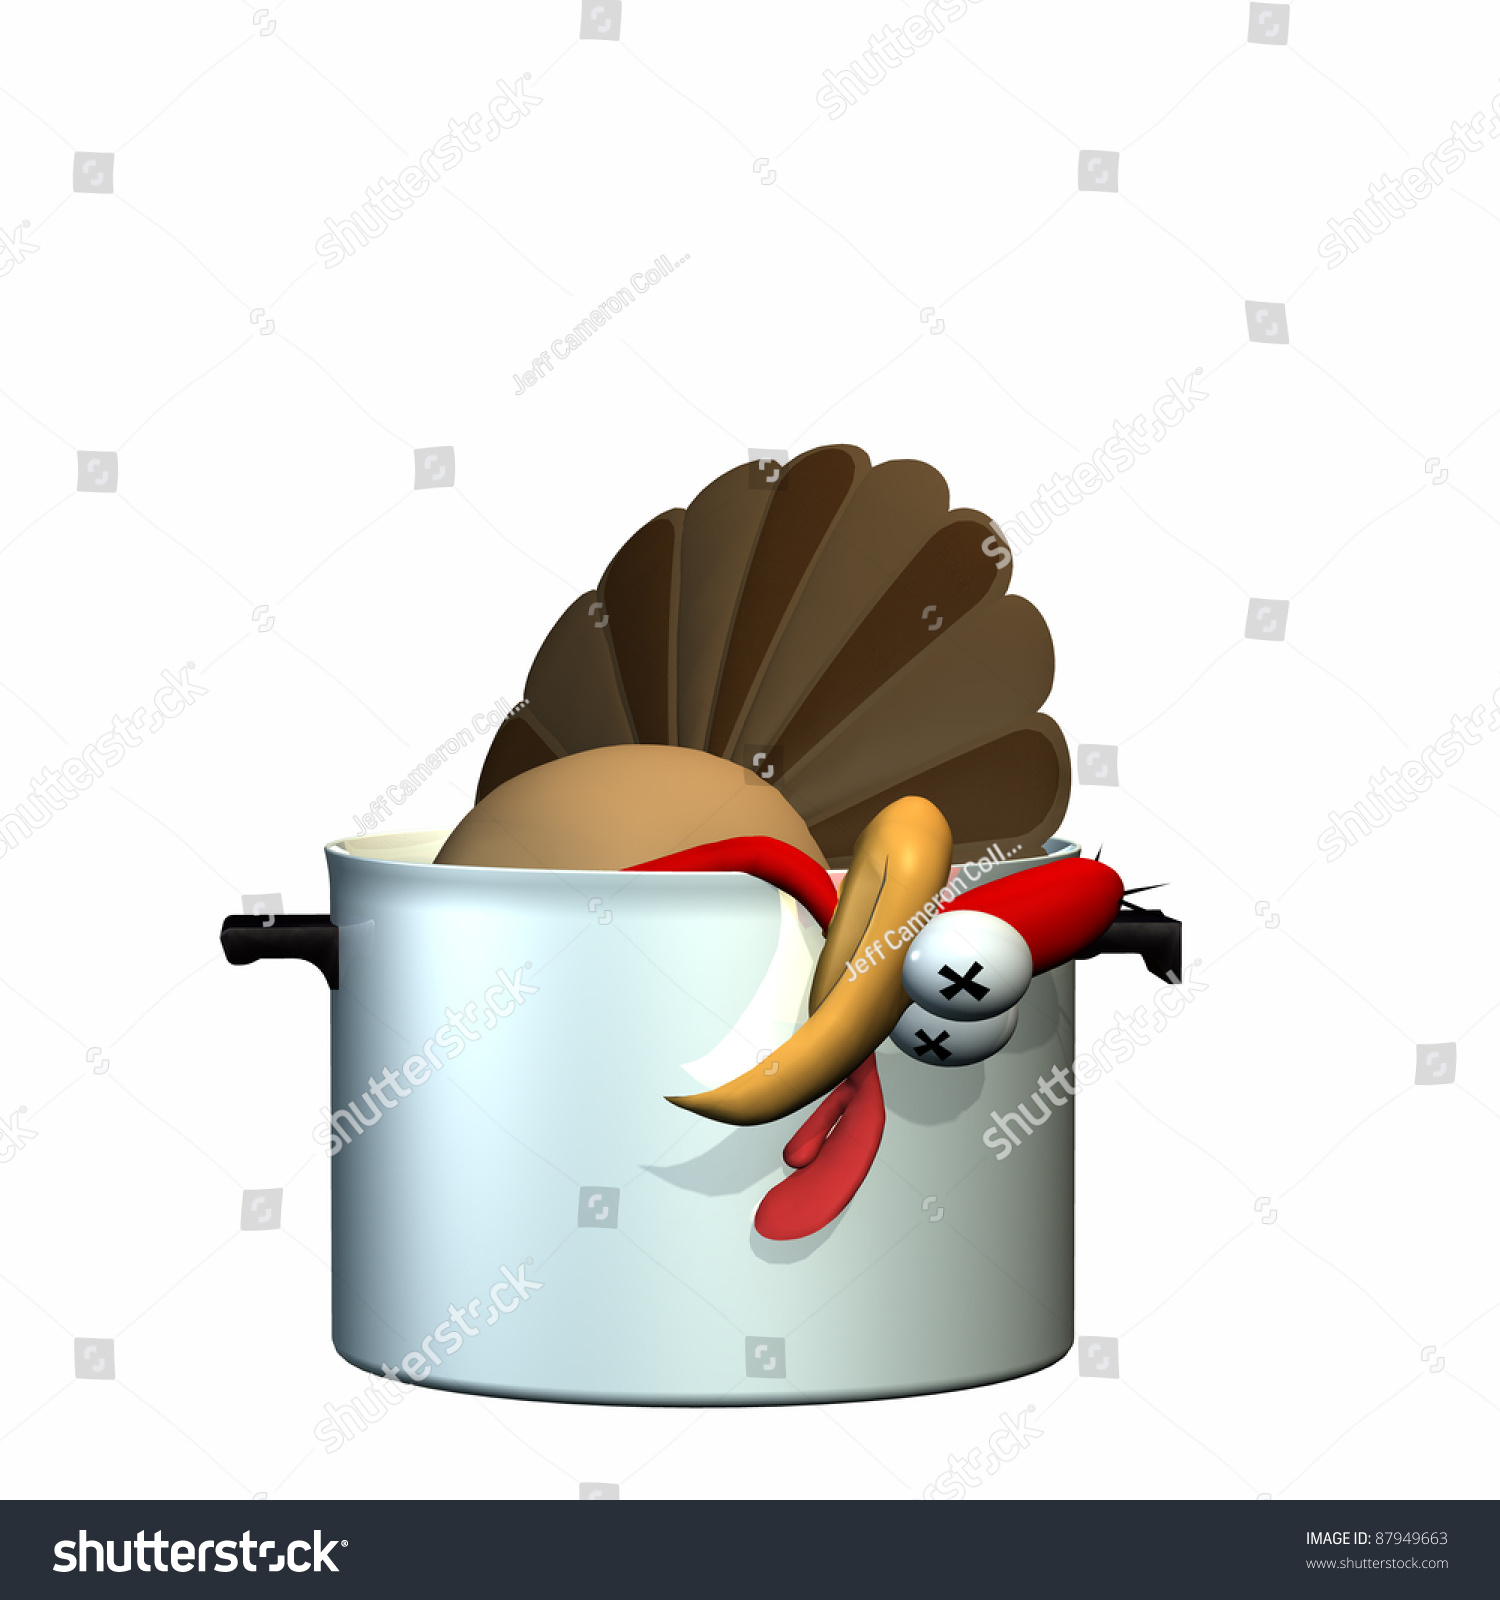 Dead turkey Images, Stock Photos & Vectors Shutterstock